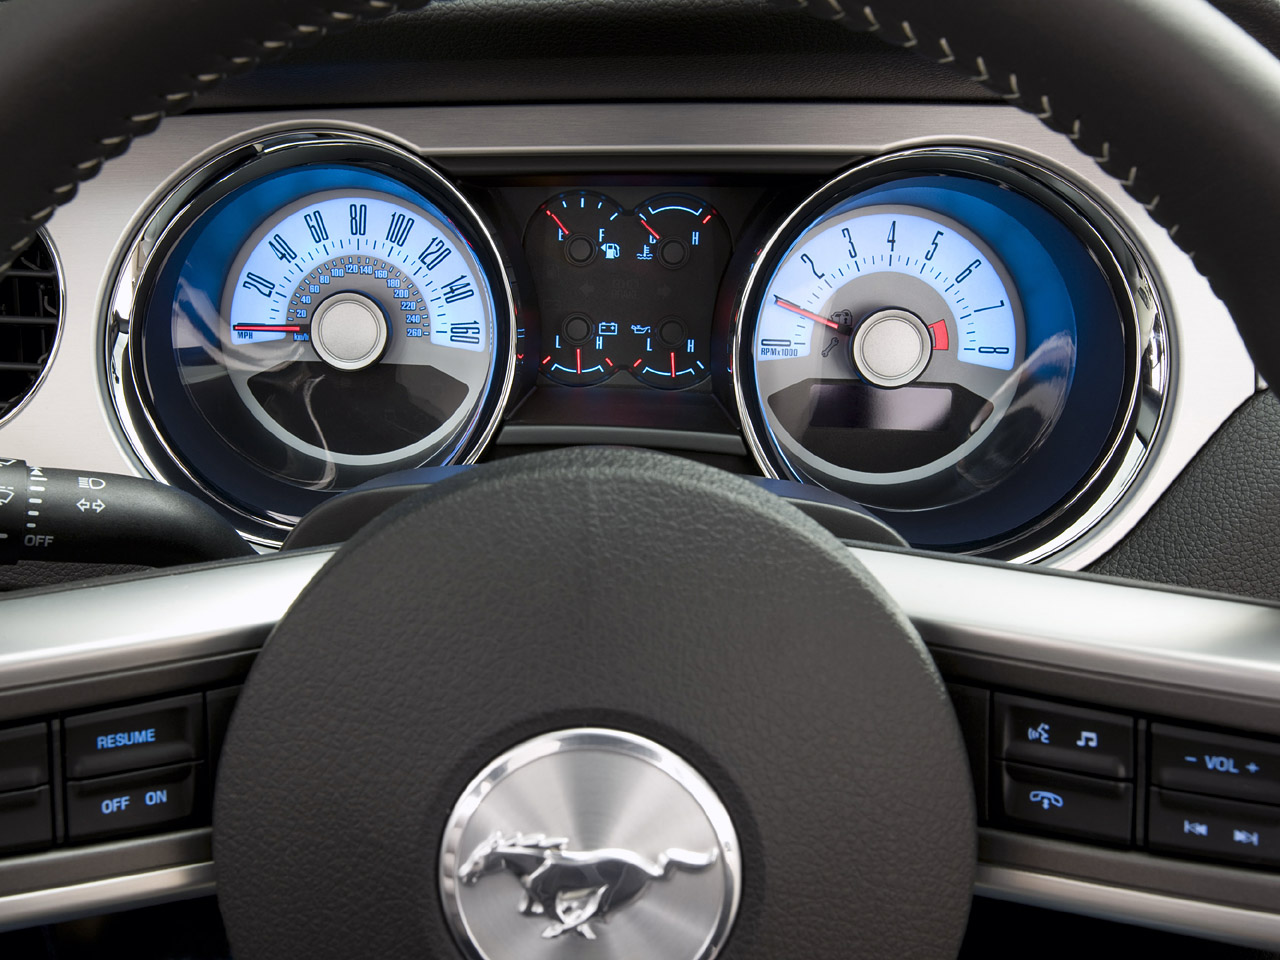 2011 Ford Mustang V6